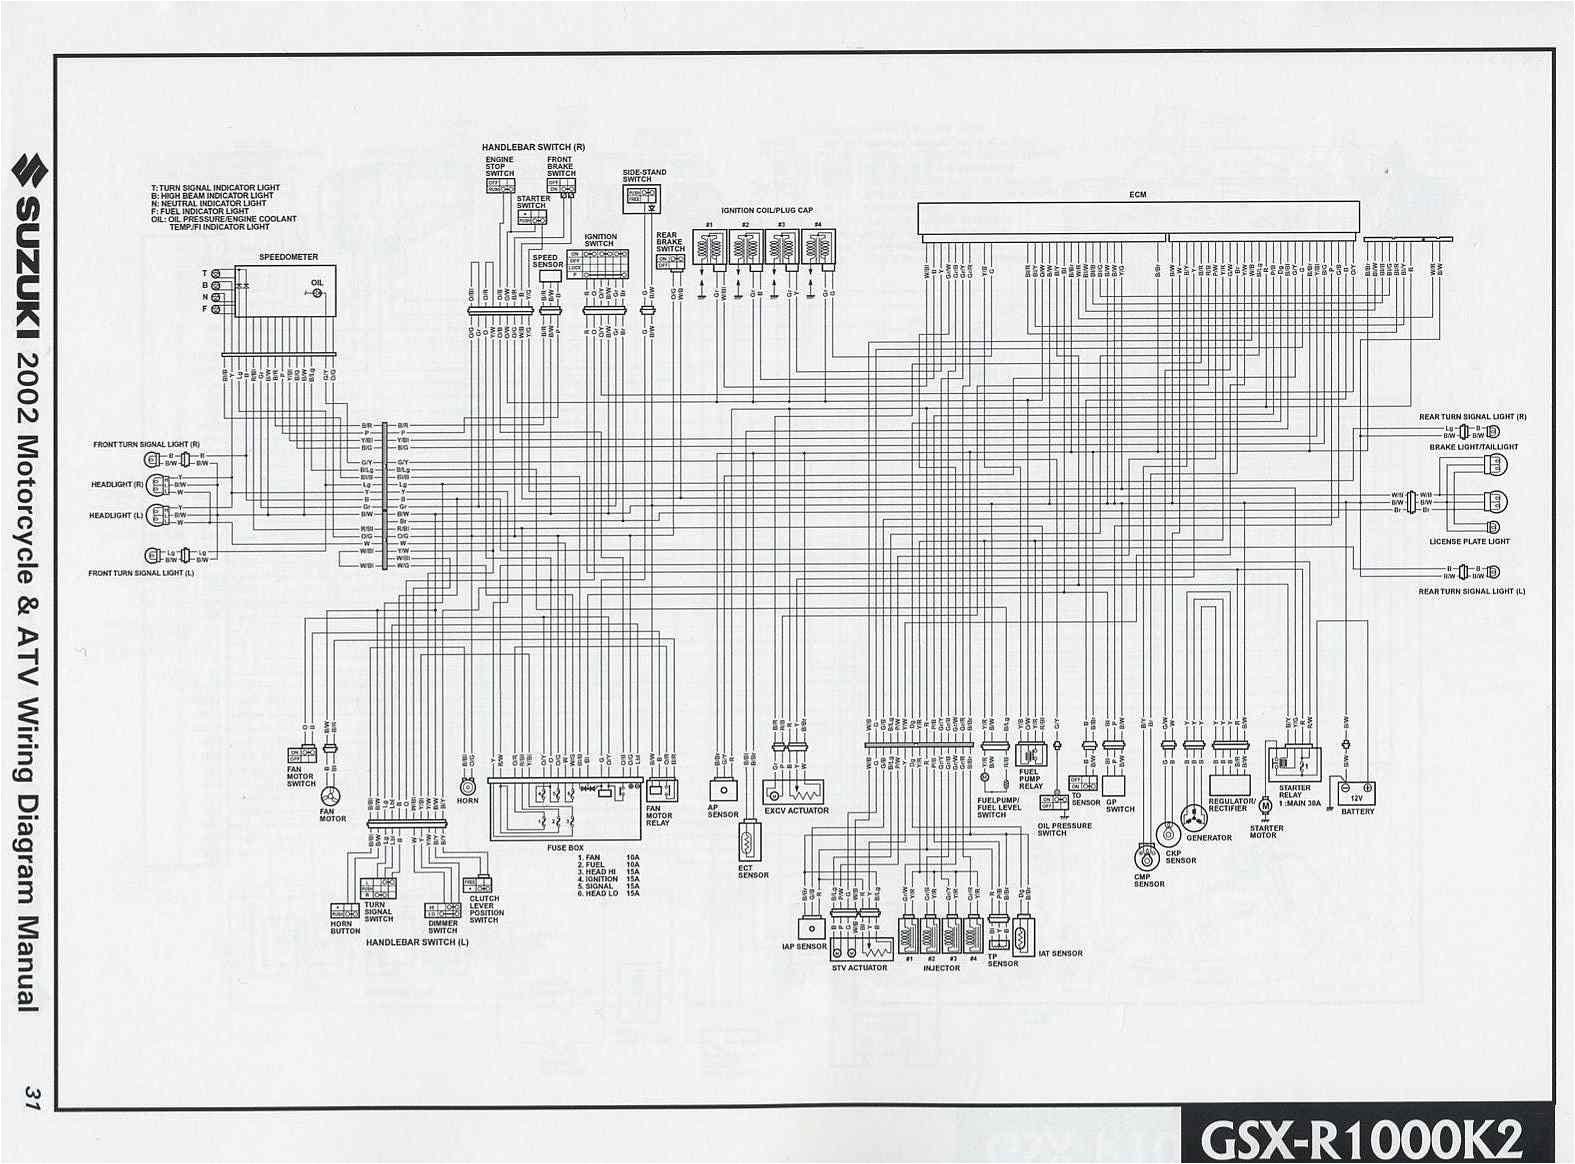 1997 gsx 800 wiring diagram wiring diagramwiring gsx diagram suzuki 1997 r600v wod wiring diagramwiring gsx